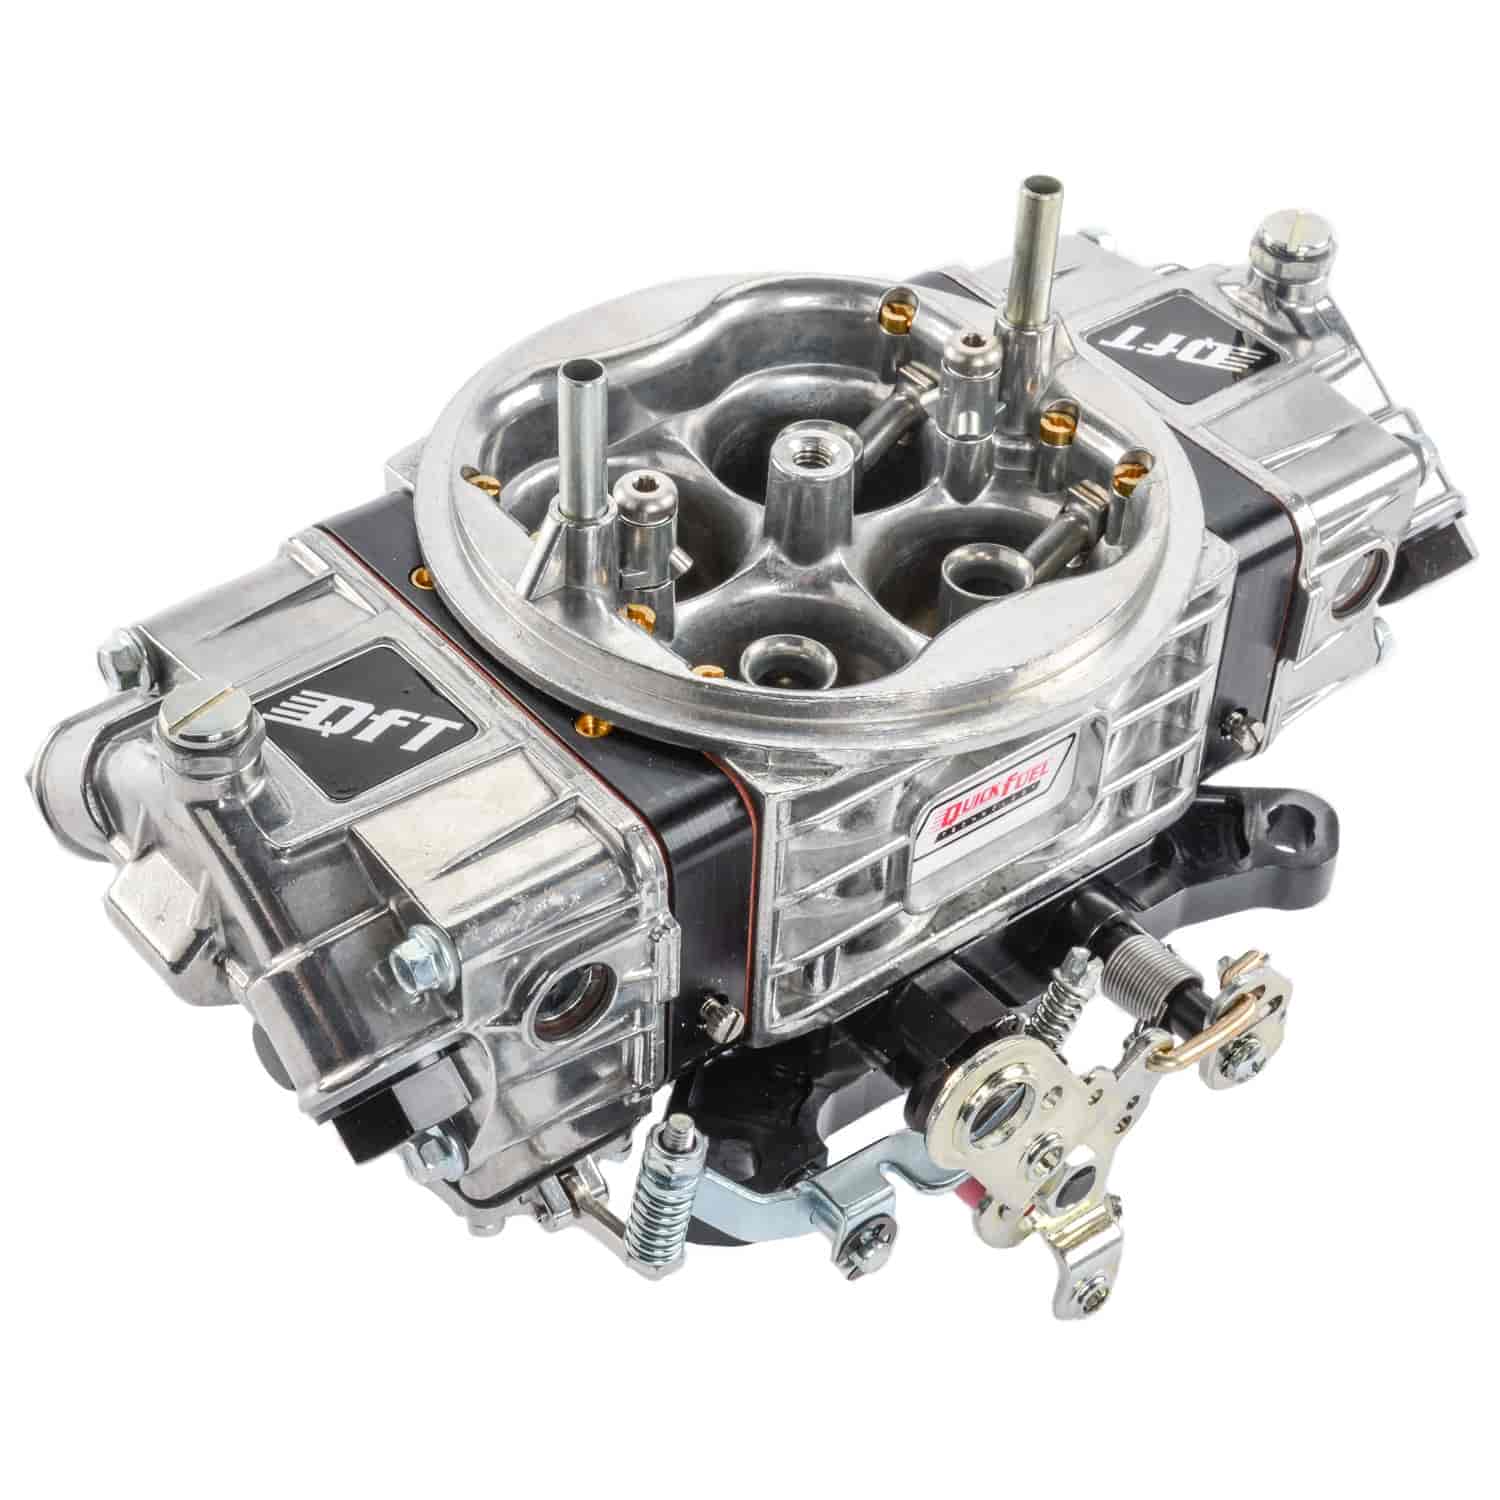 Race-Q 1050 CFM Carburetor